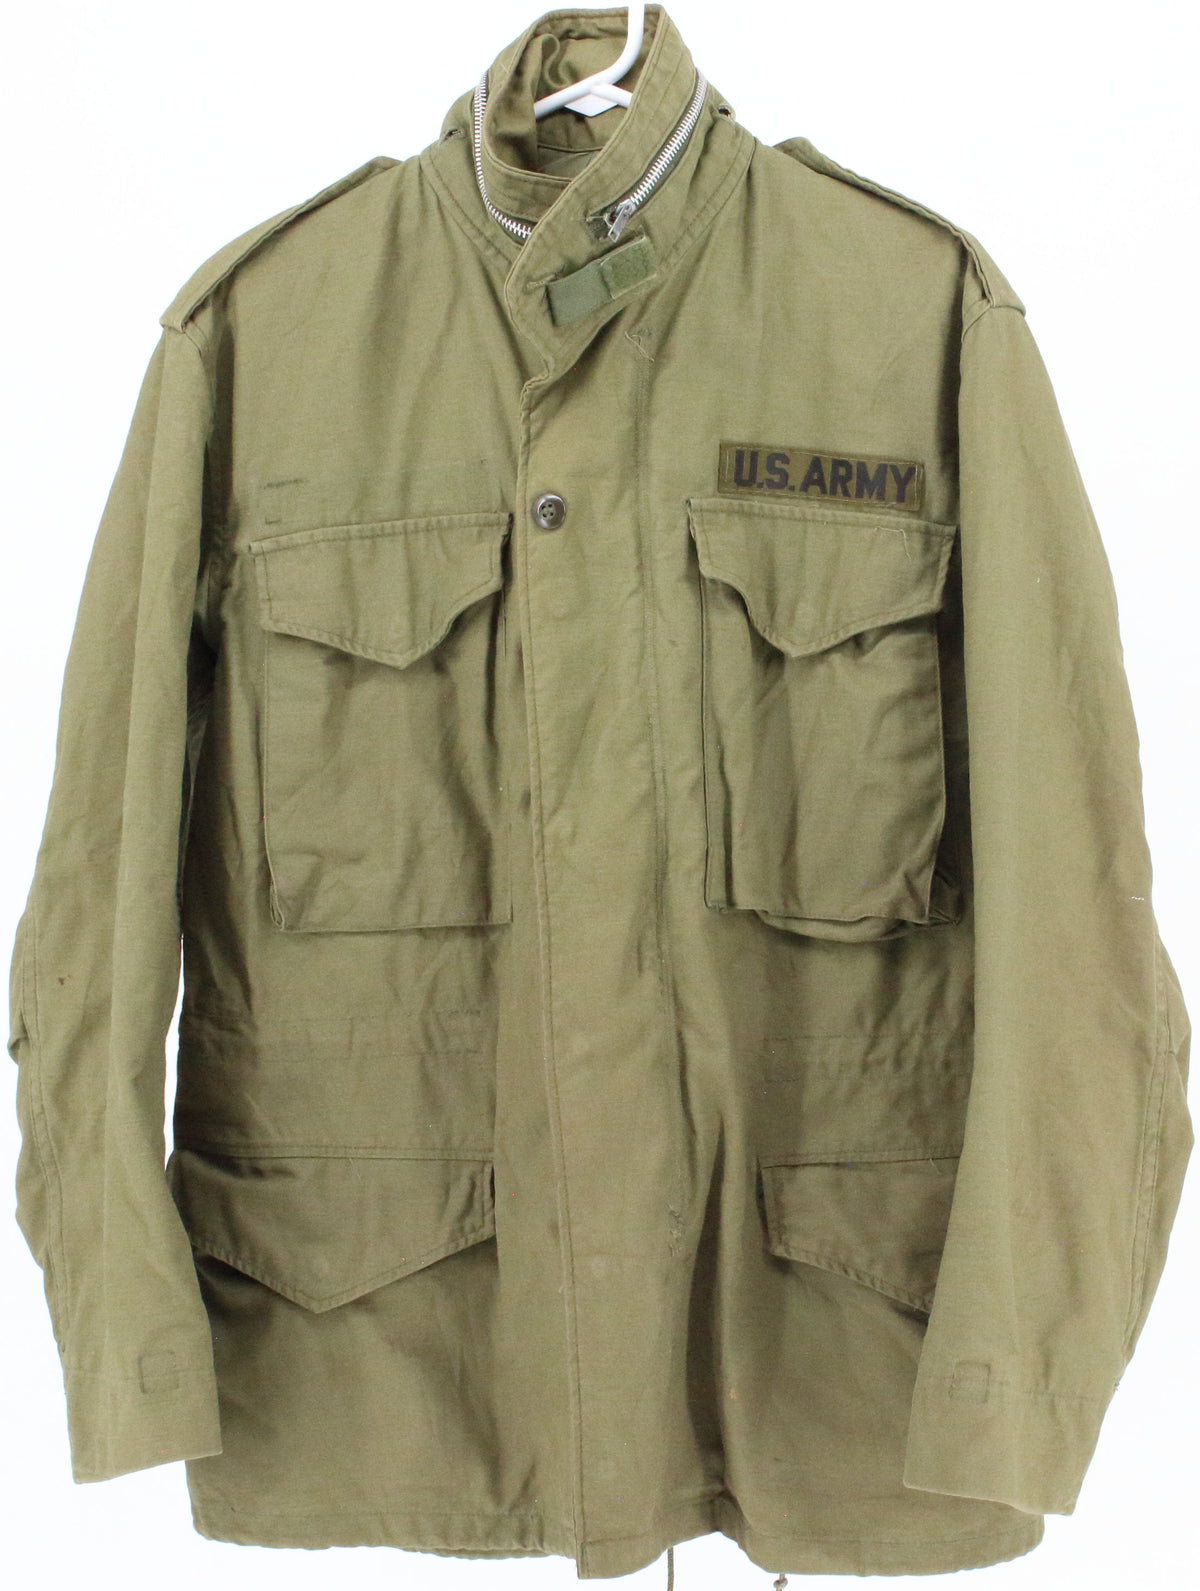 John Ownbay Company, Inc. U.S. Army Green Coat